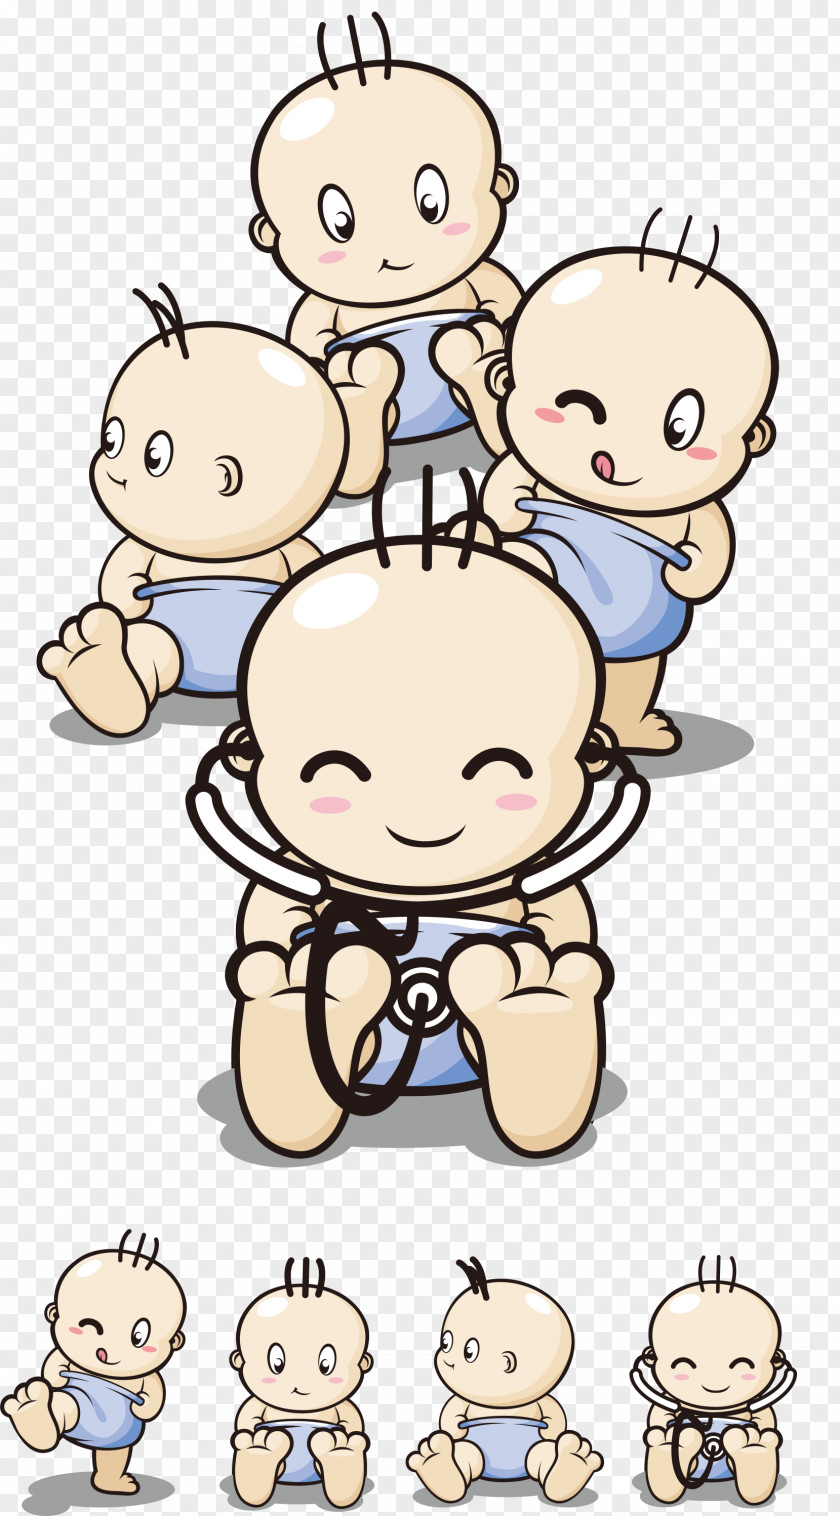 Baby Vector Material Diaper Infant Cartoon Clip Art PNG